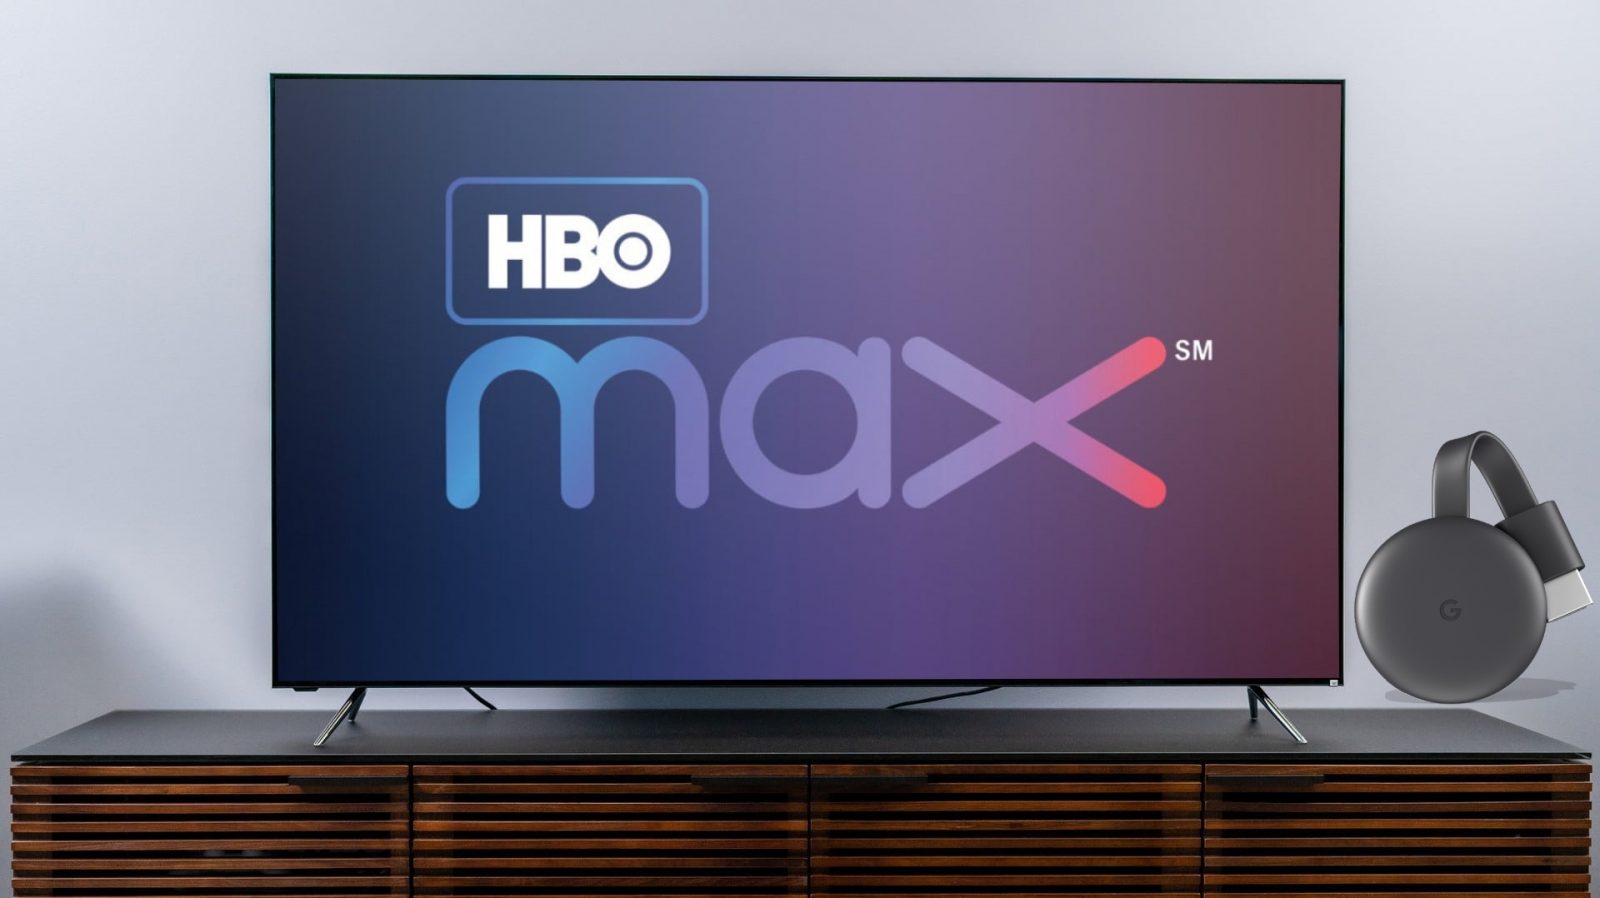 Chromecast HBO Max